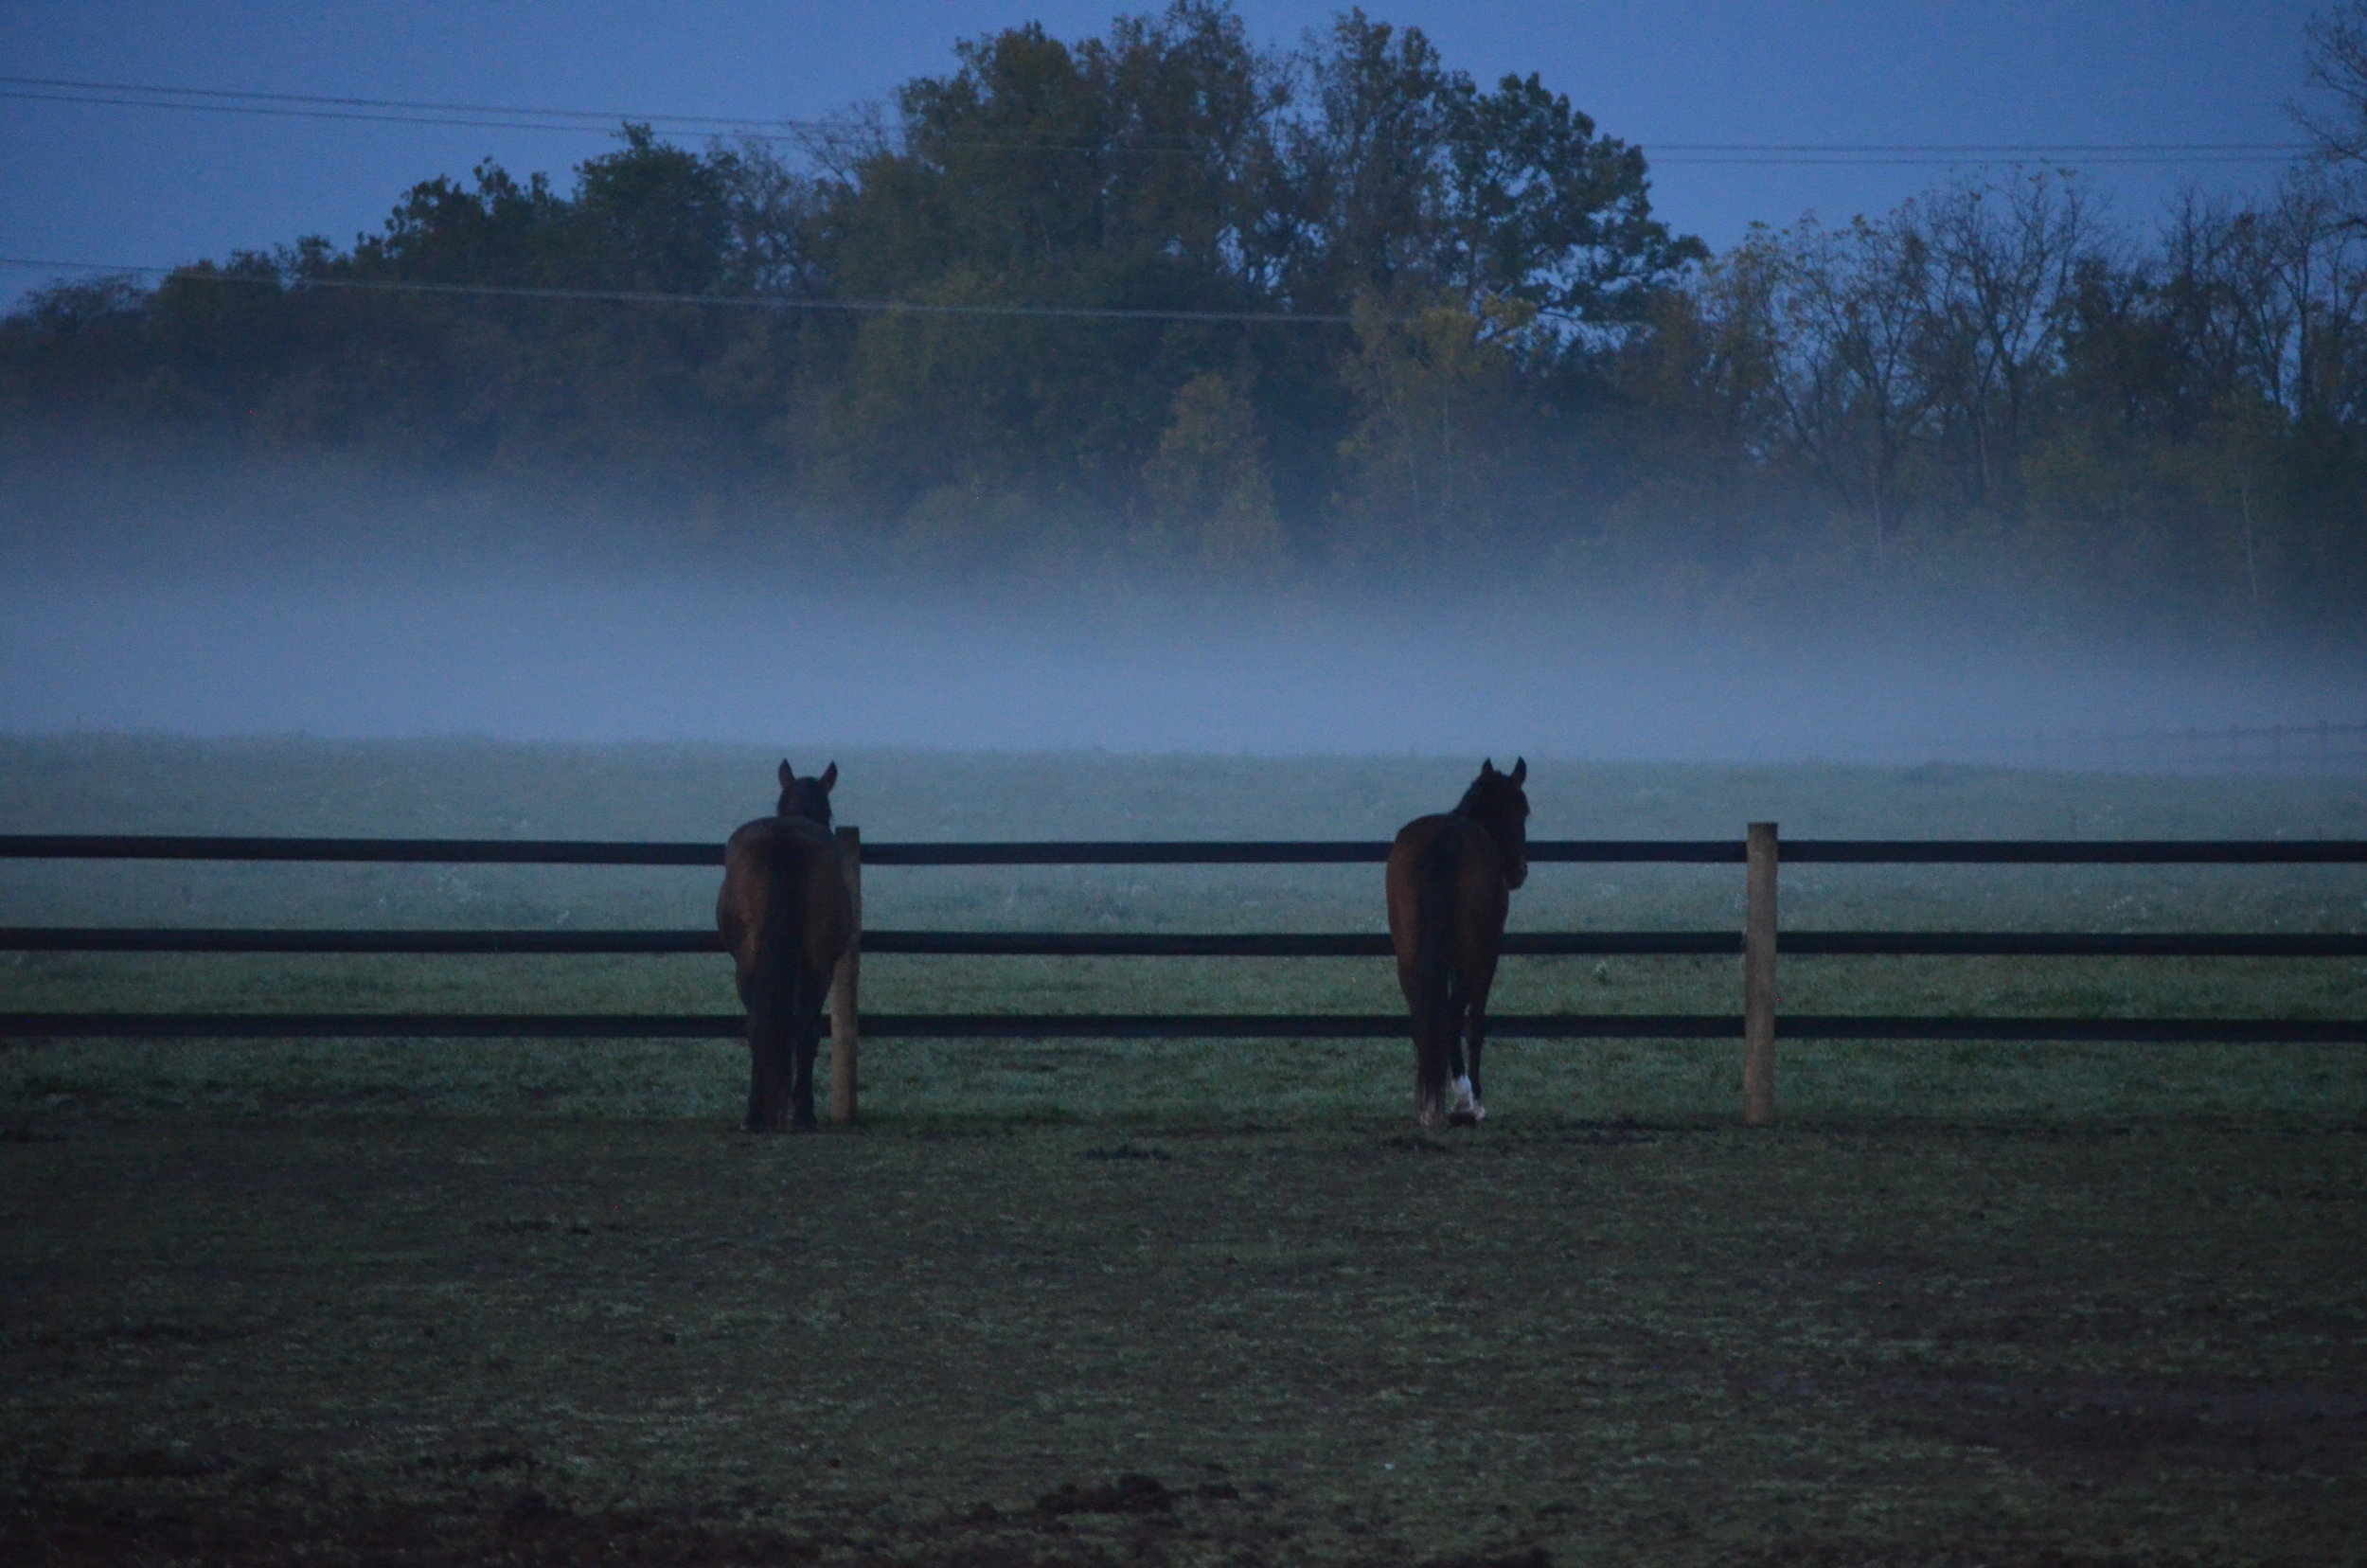 Belleame Farm Horses and Fog